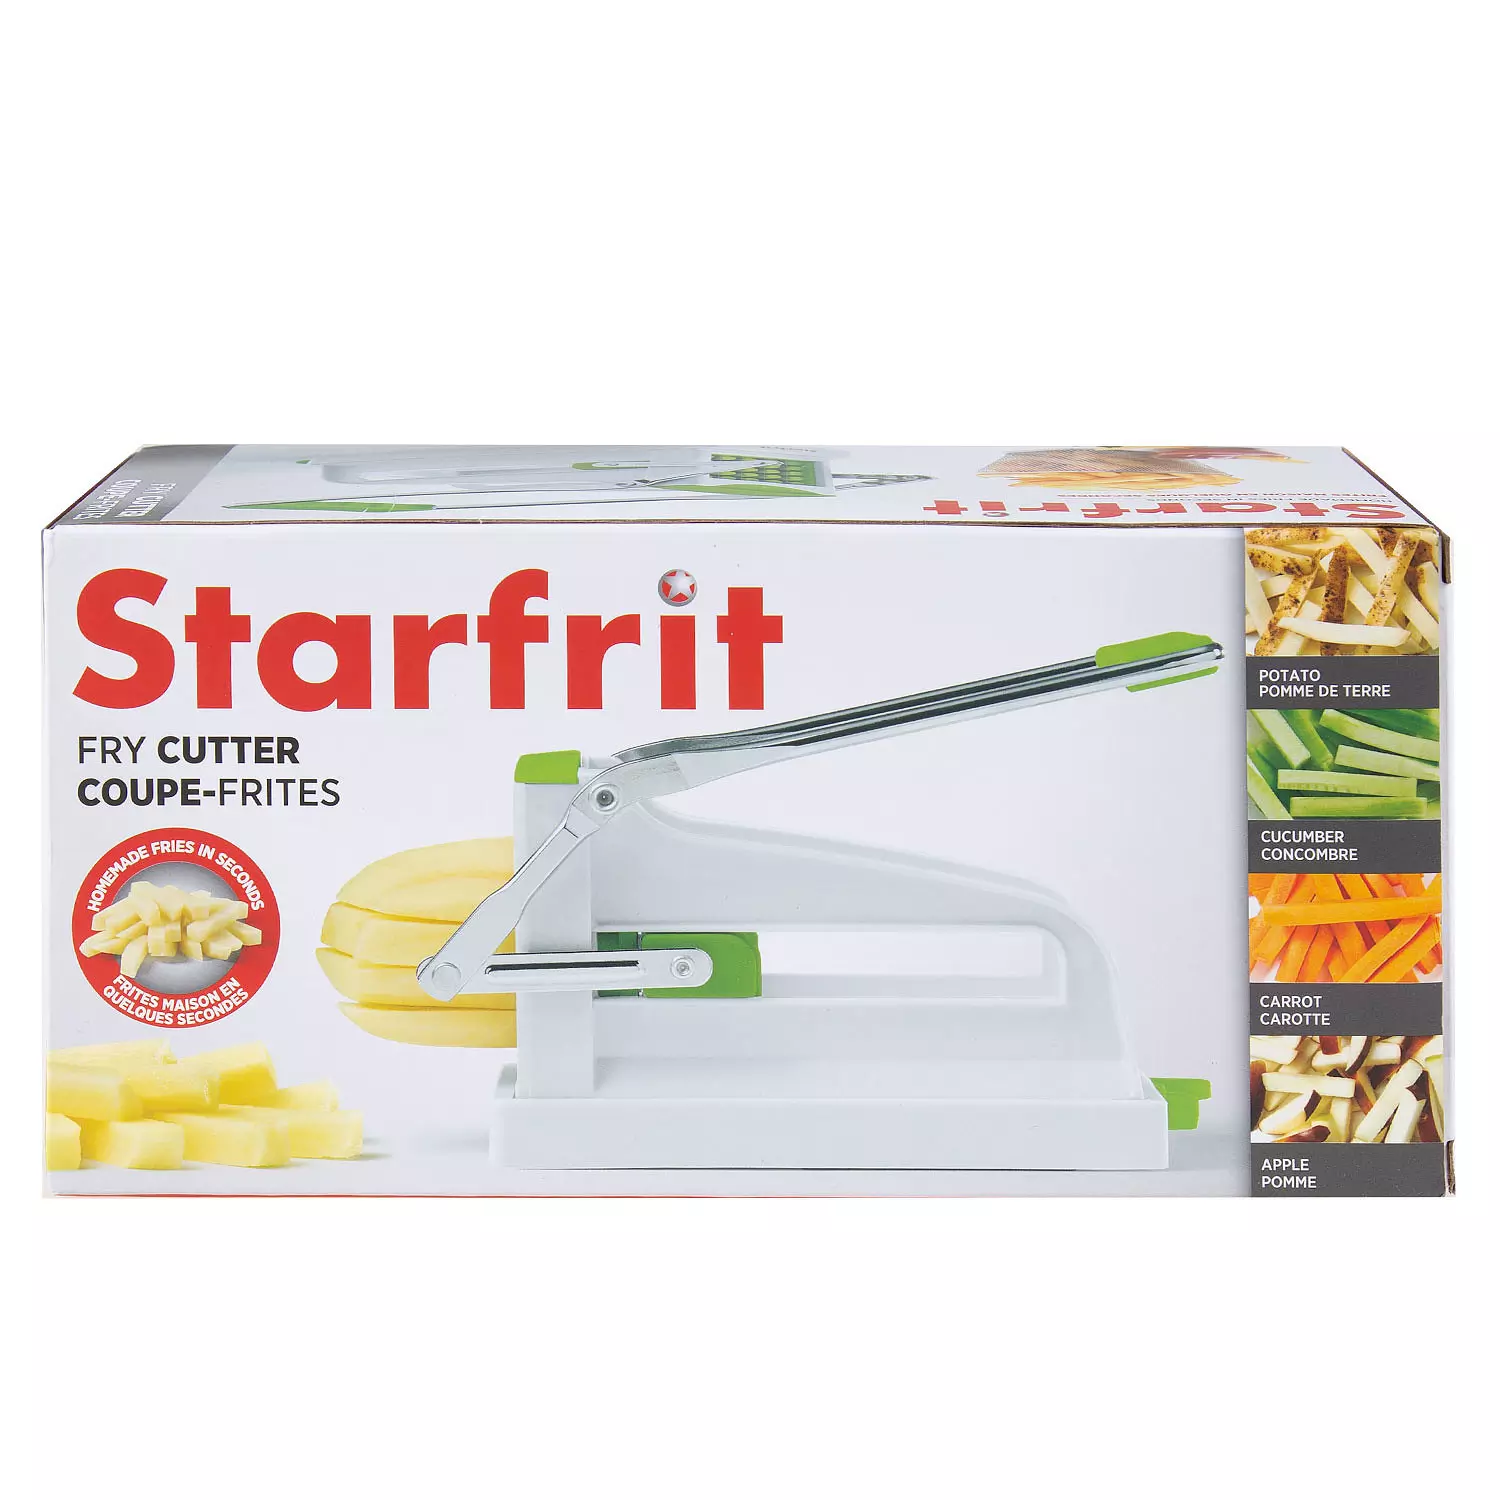 Starfrit - Coupe-frites. Colour: white, Fr